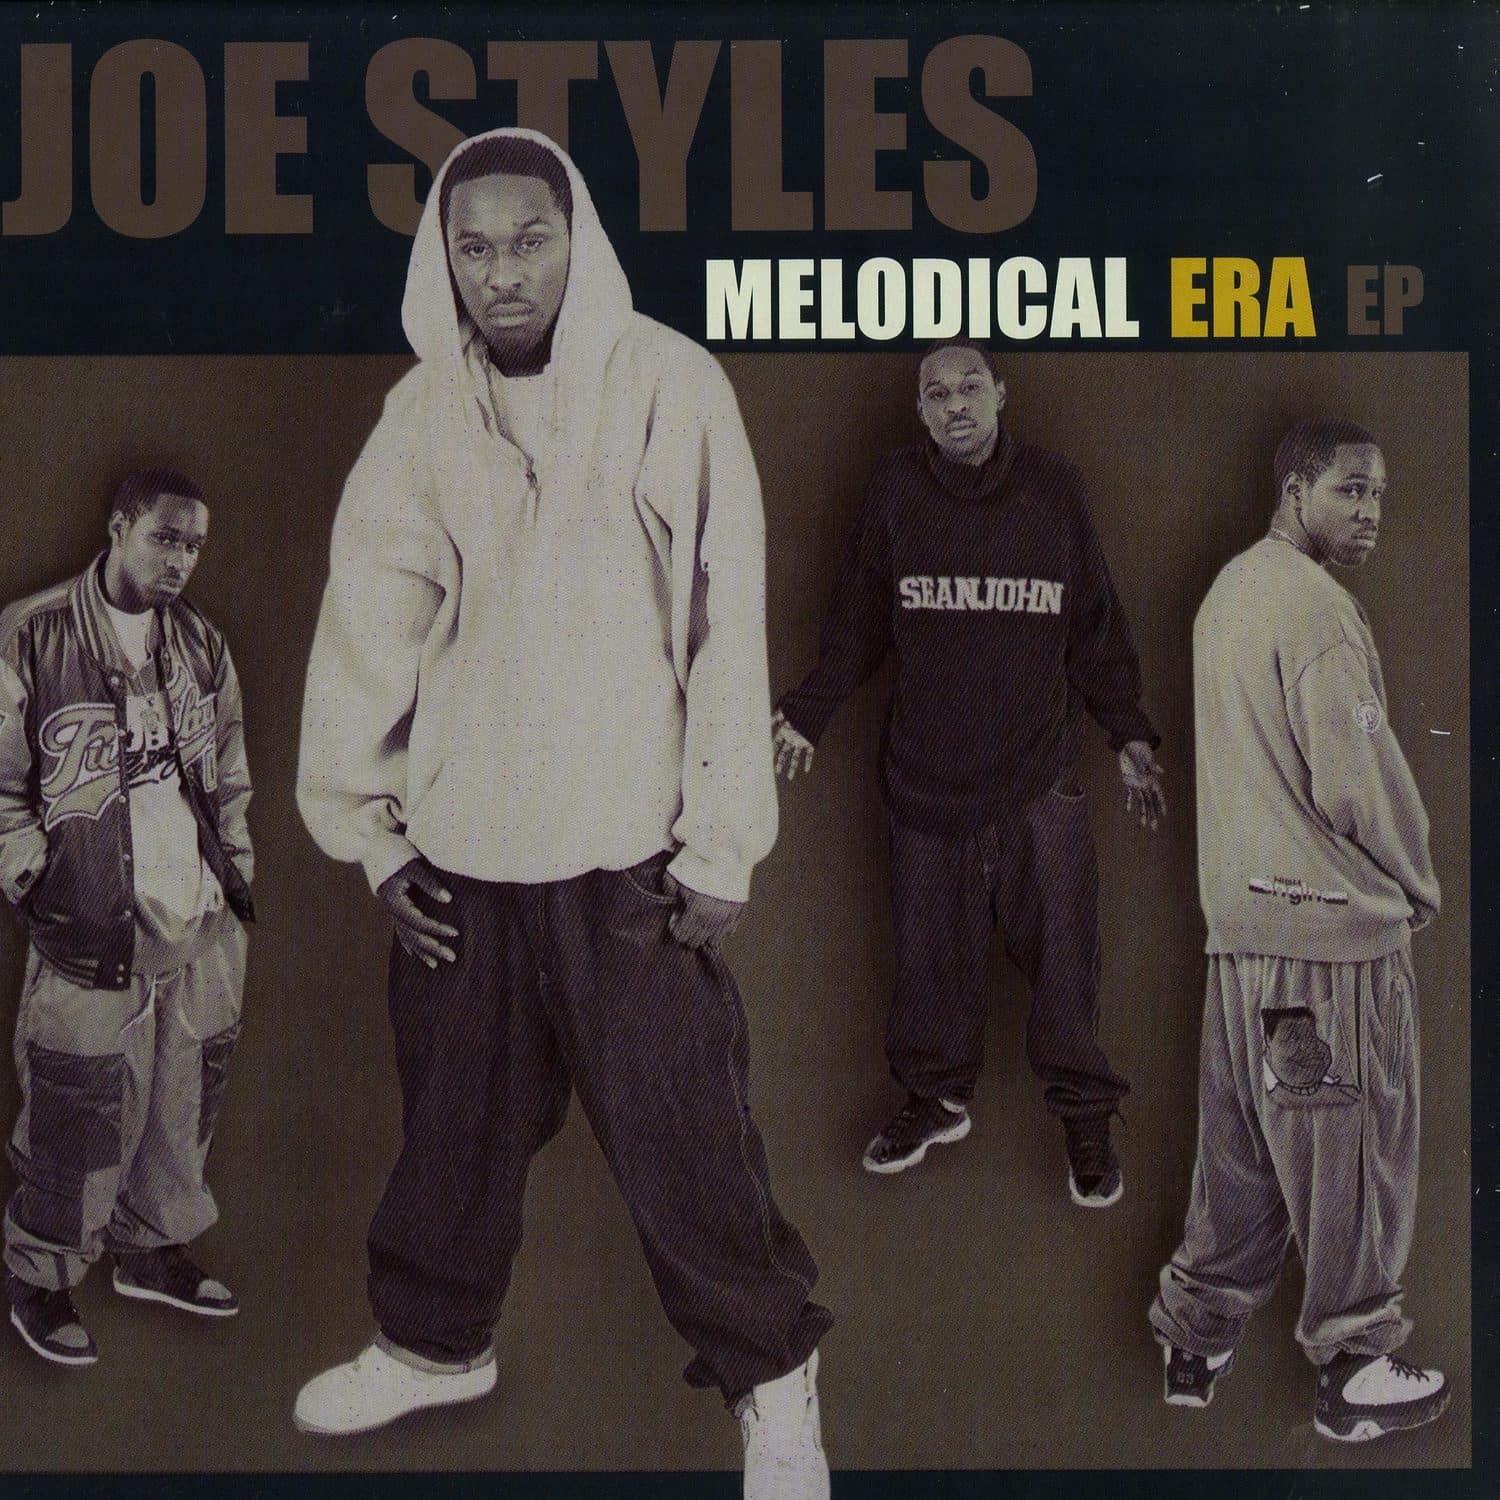 Joe Styles - MELODICAL ERA EP